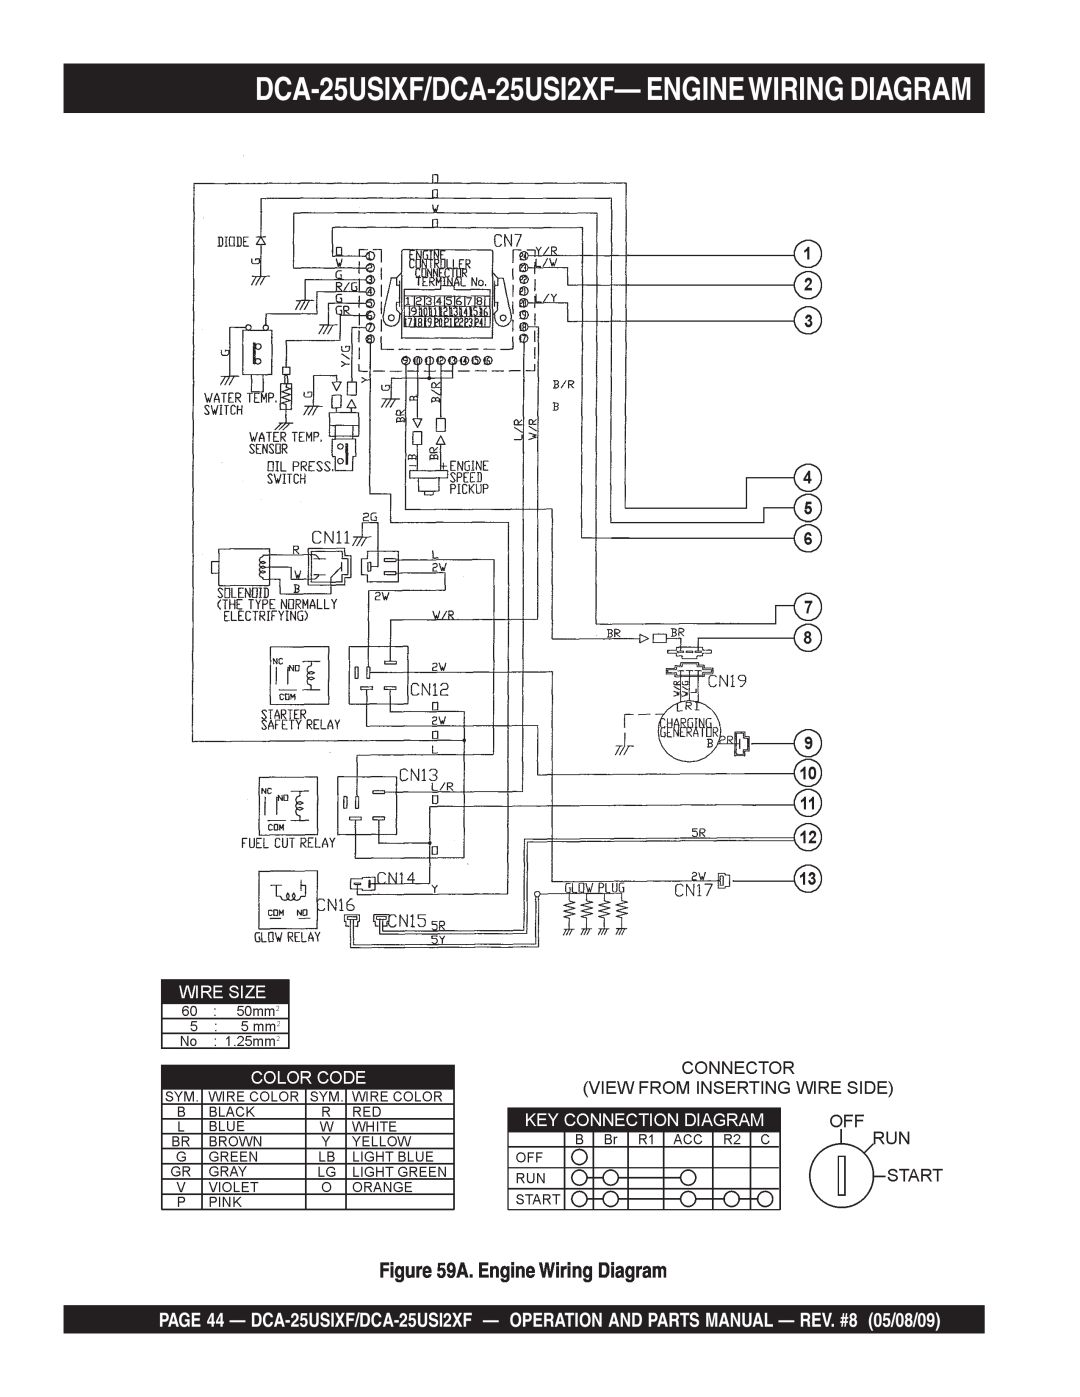 Multiquip operation manual DCA-25USIXF/DCA-25USI2XF- ENGINEWIRING DIAGRAM, A. Engine Wiring Diagram 